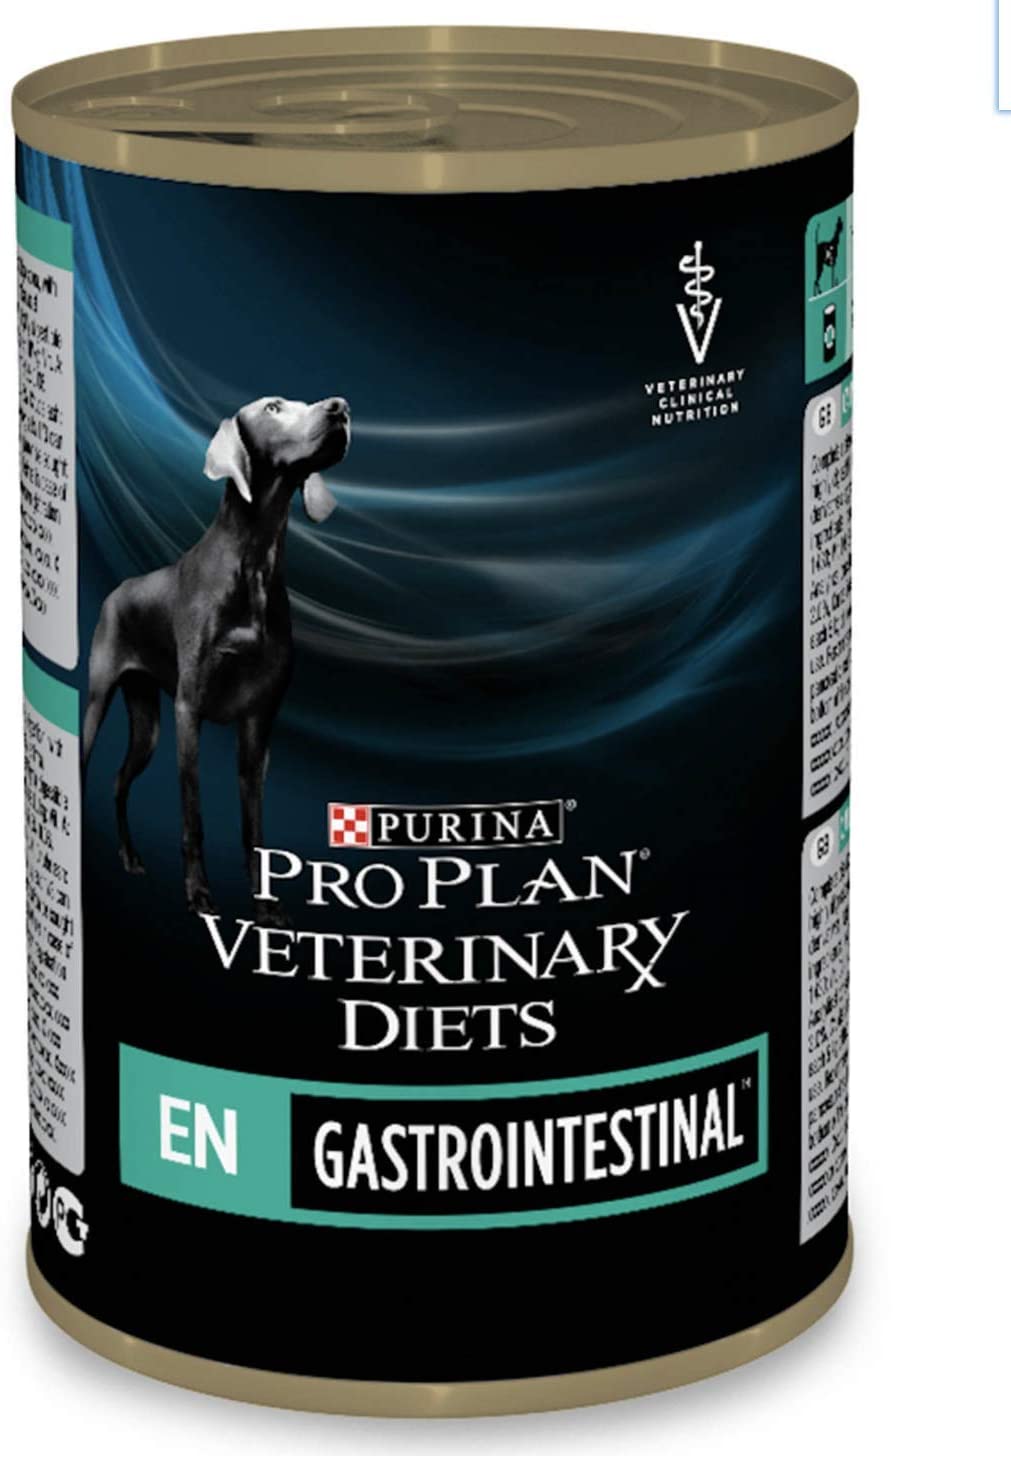 PRO PLAN Veterinary Diets Canine EN Gastrointestinal Wet Dog Food